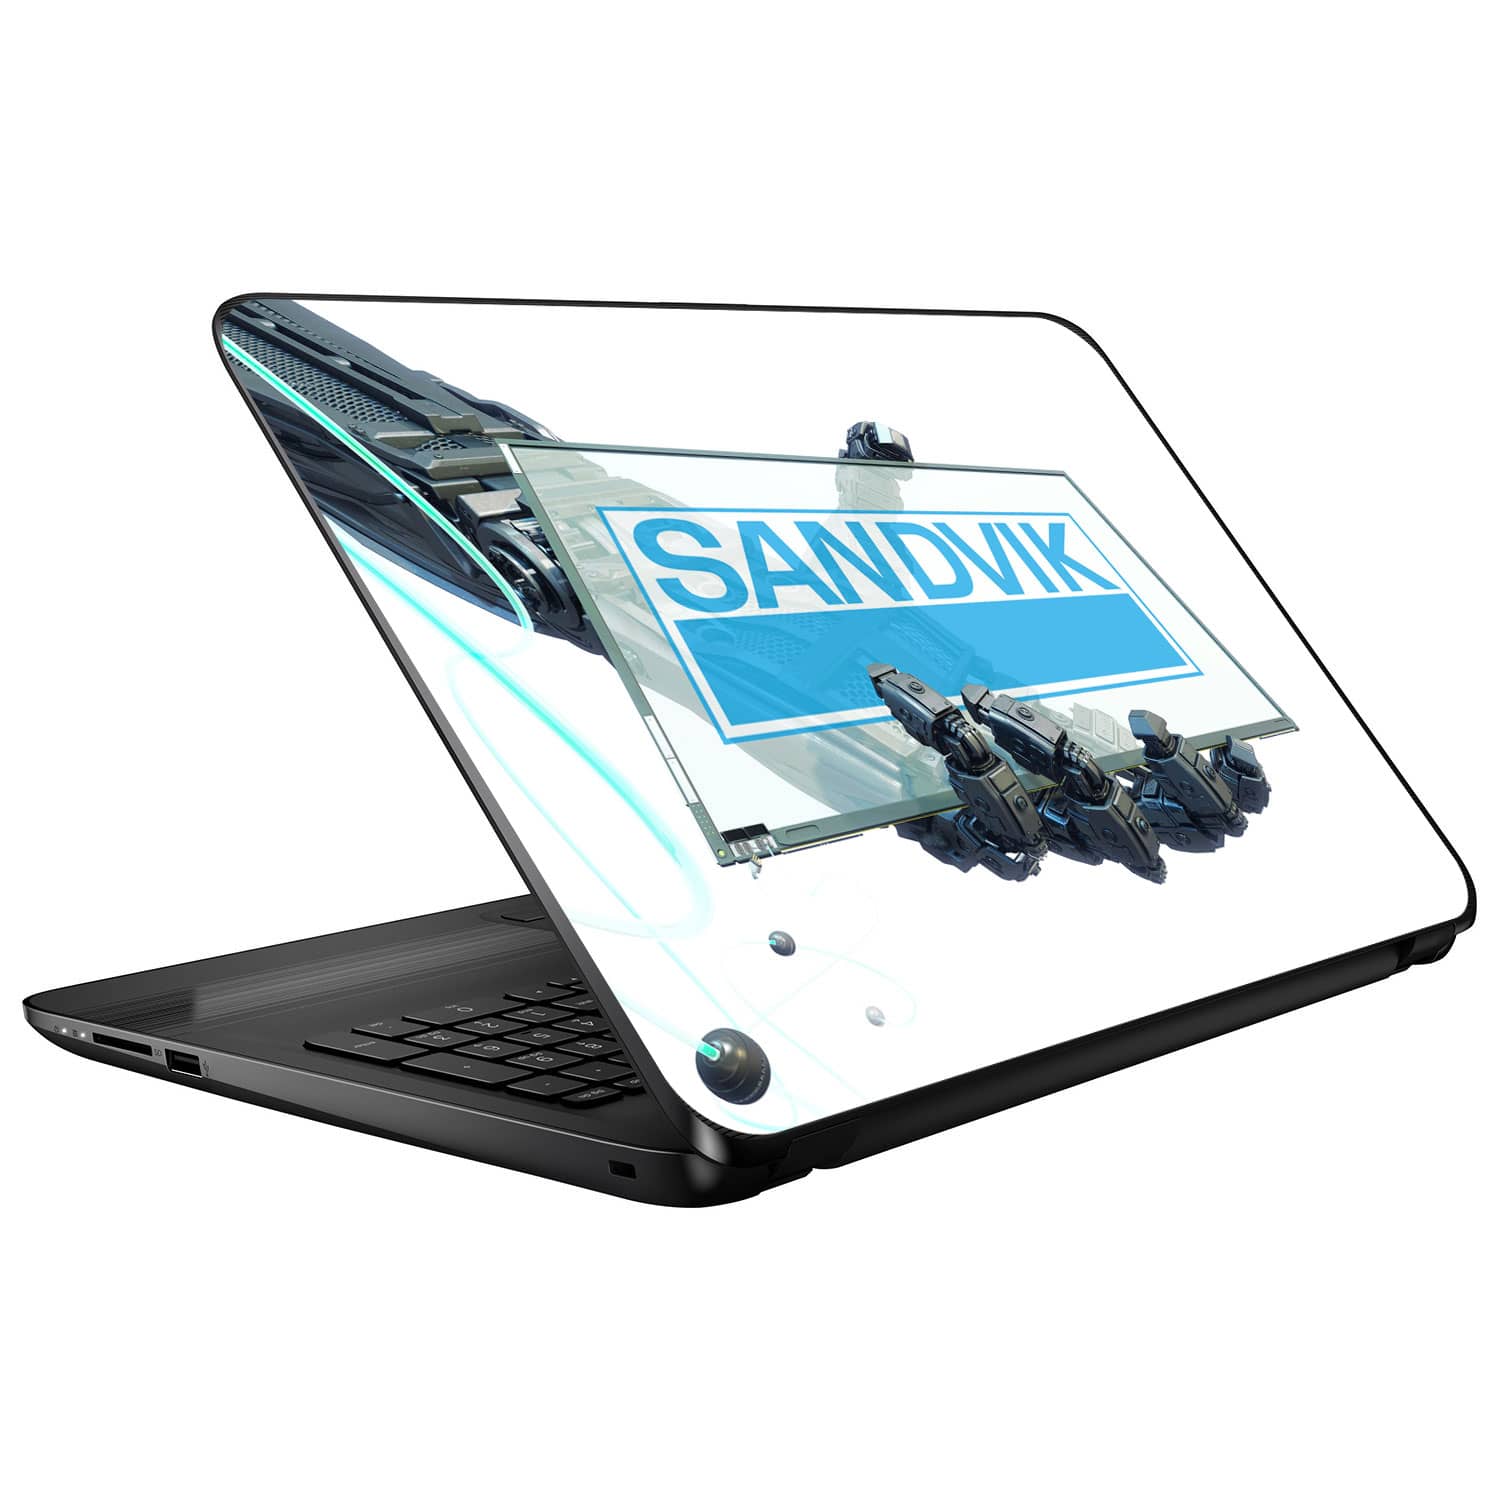 Sandvik Laptop Skins